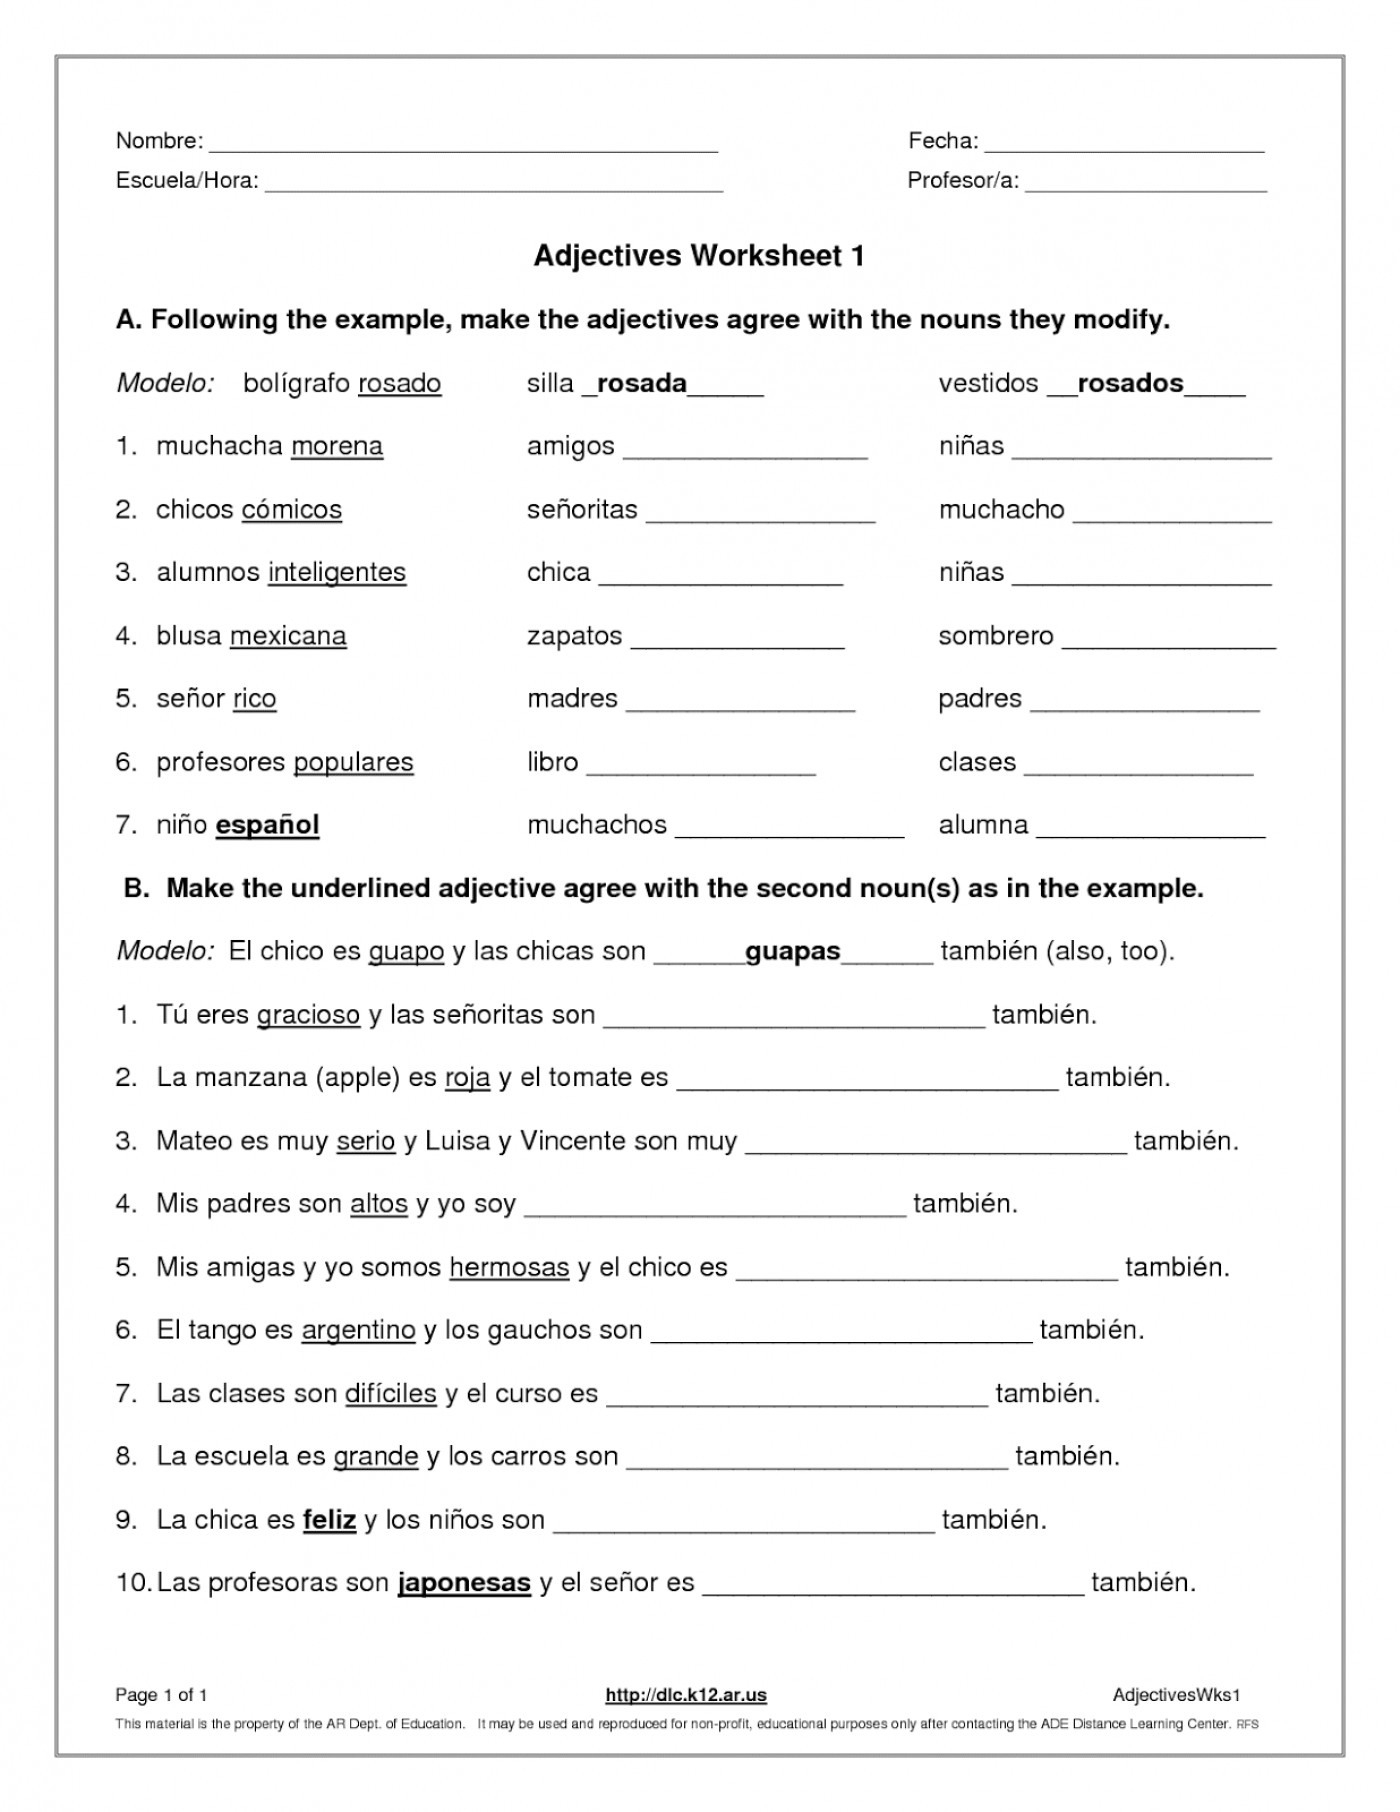 agreement-of-adjectives-spanish-worksheet-adjectiveworksheets